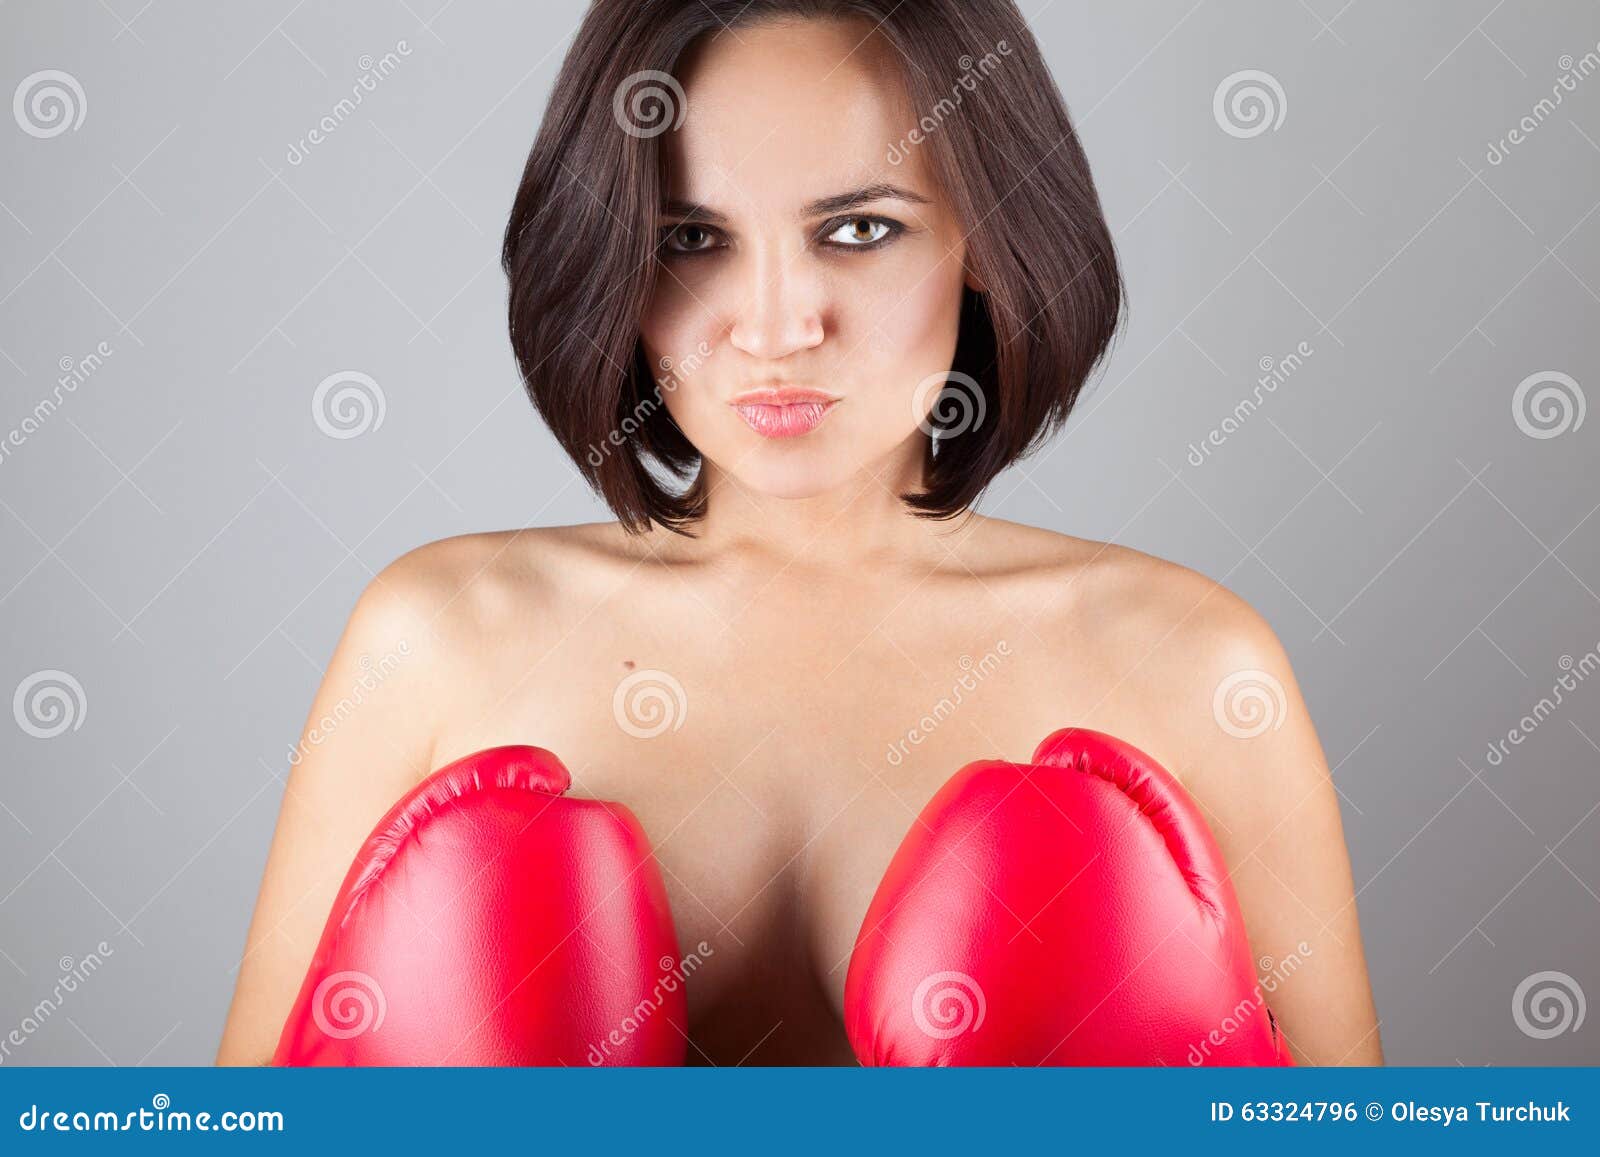 Female boxers nude